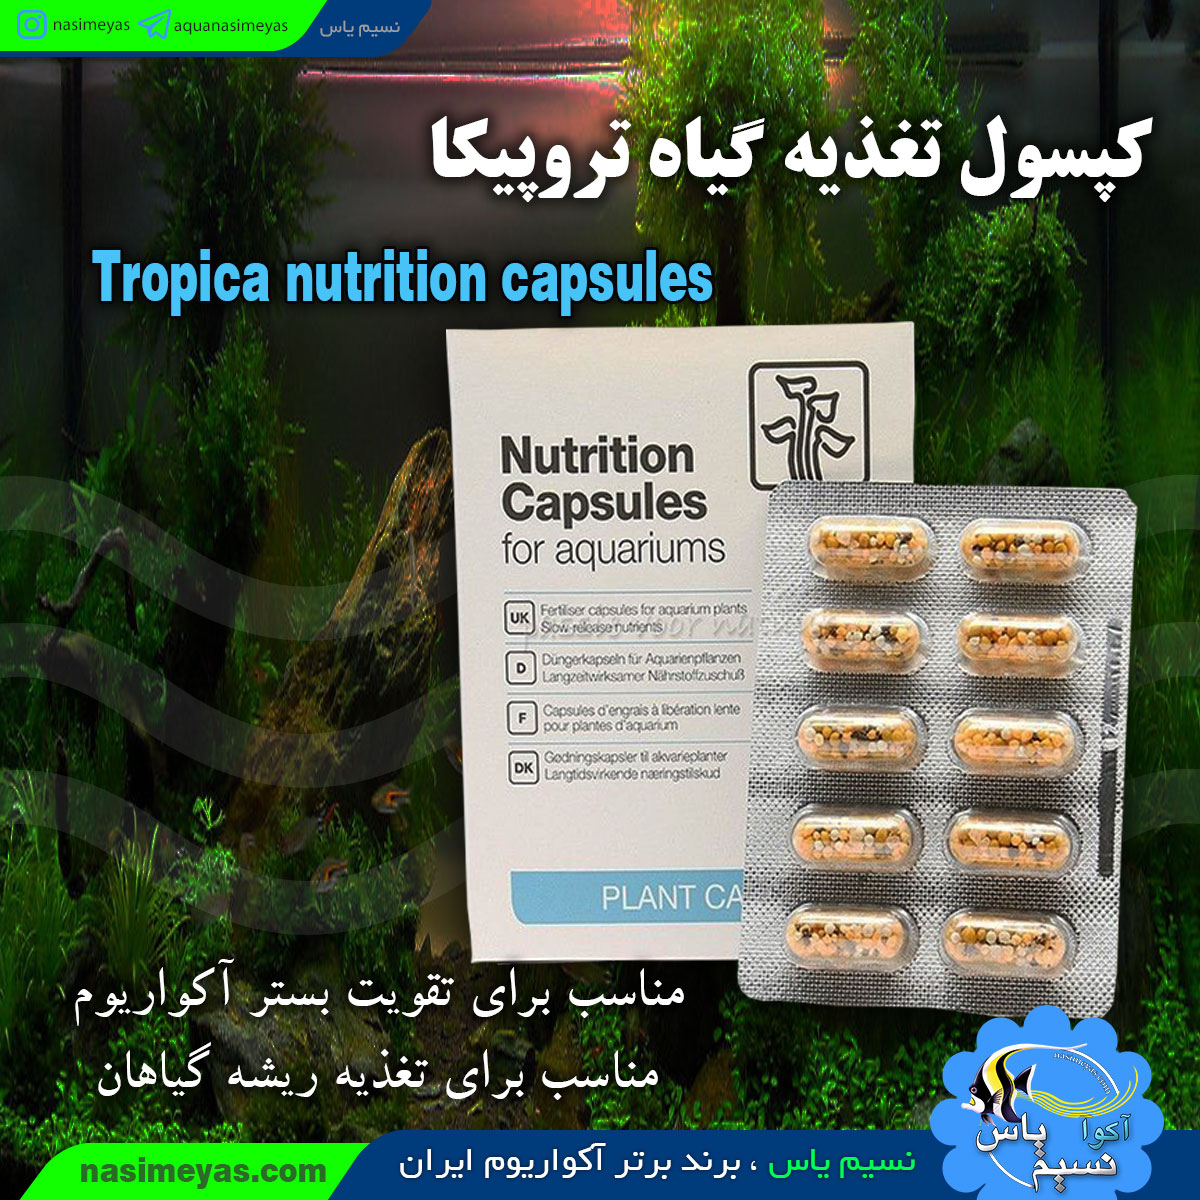 Tropica nutrition capsules